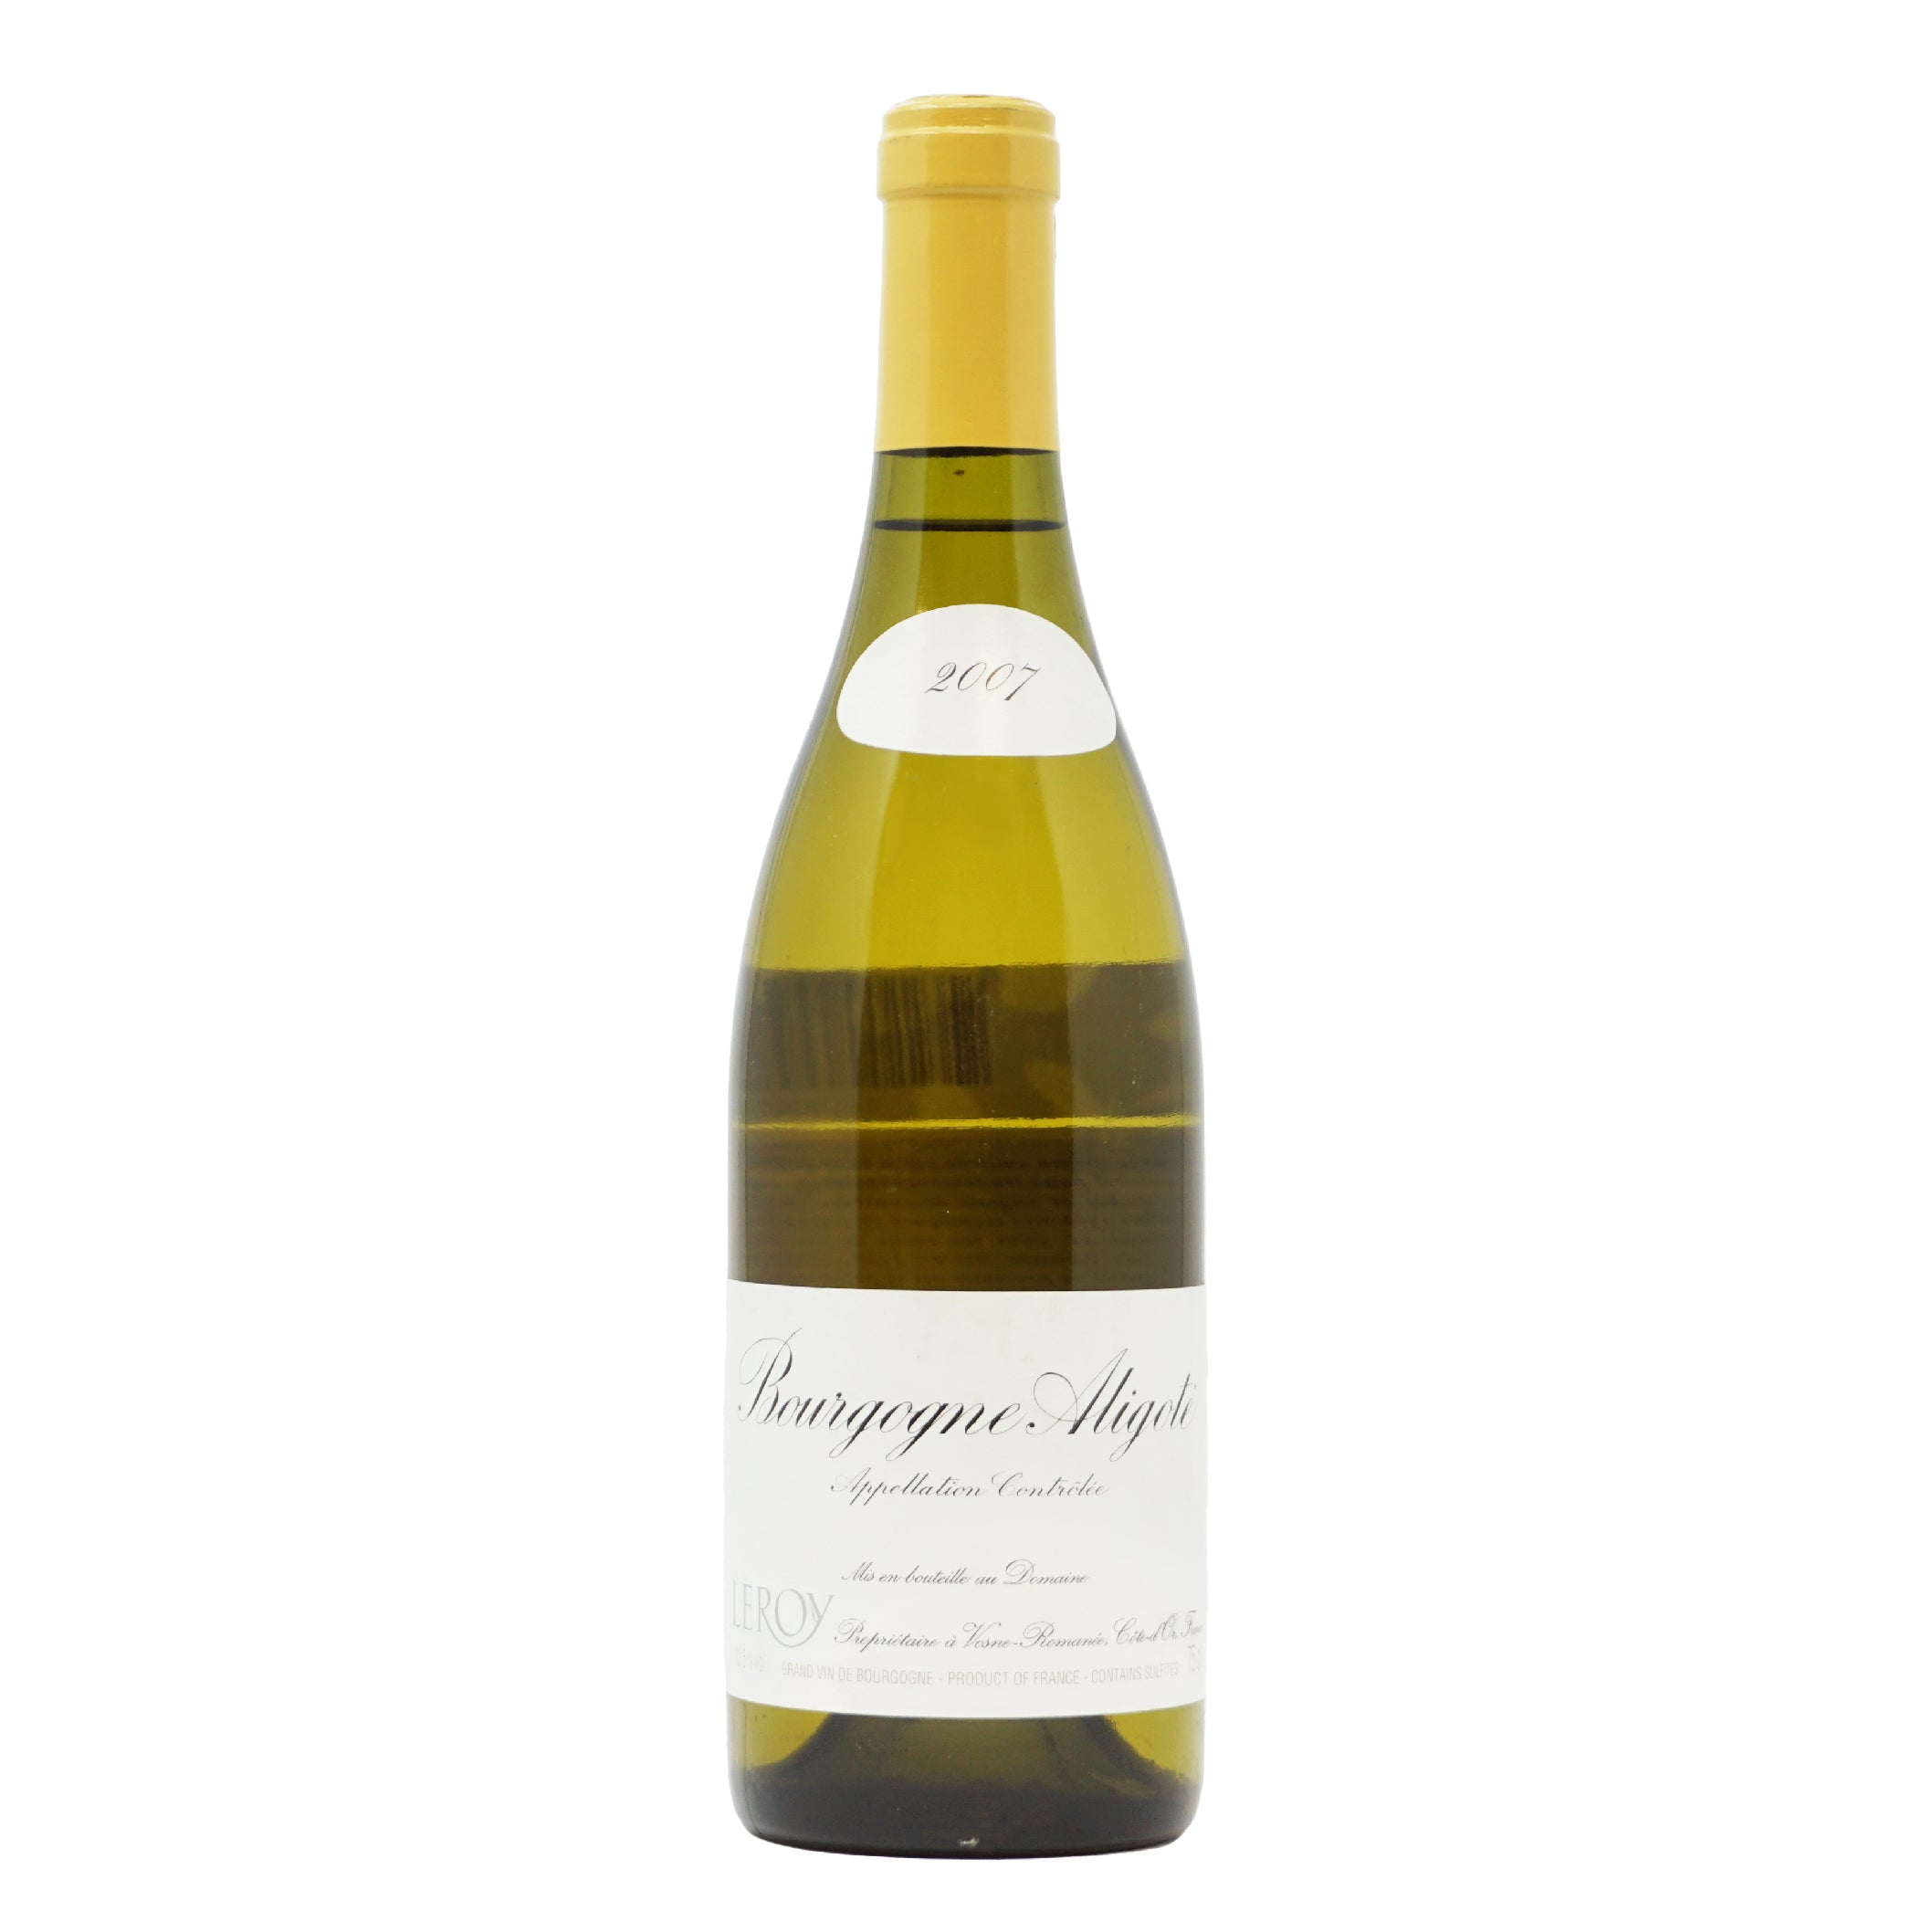 Bourgogne Aligote' 2007 Leroy Proprietaire lt.0.750